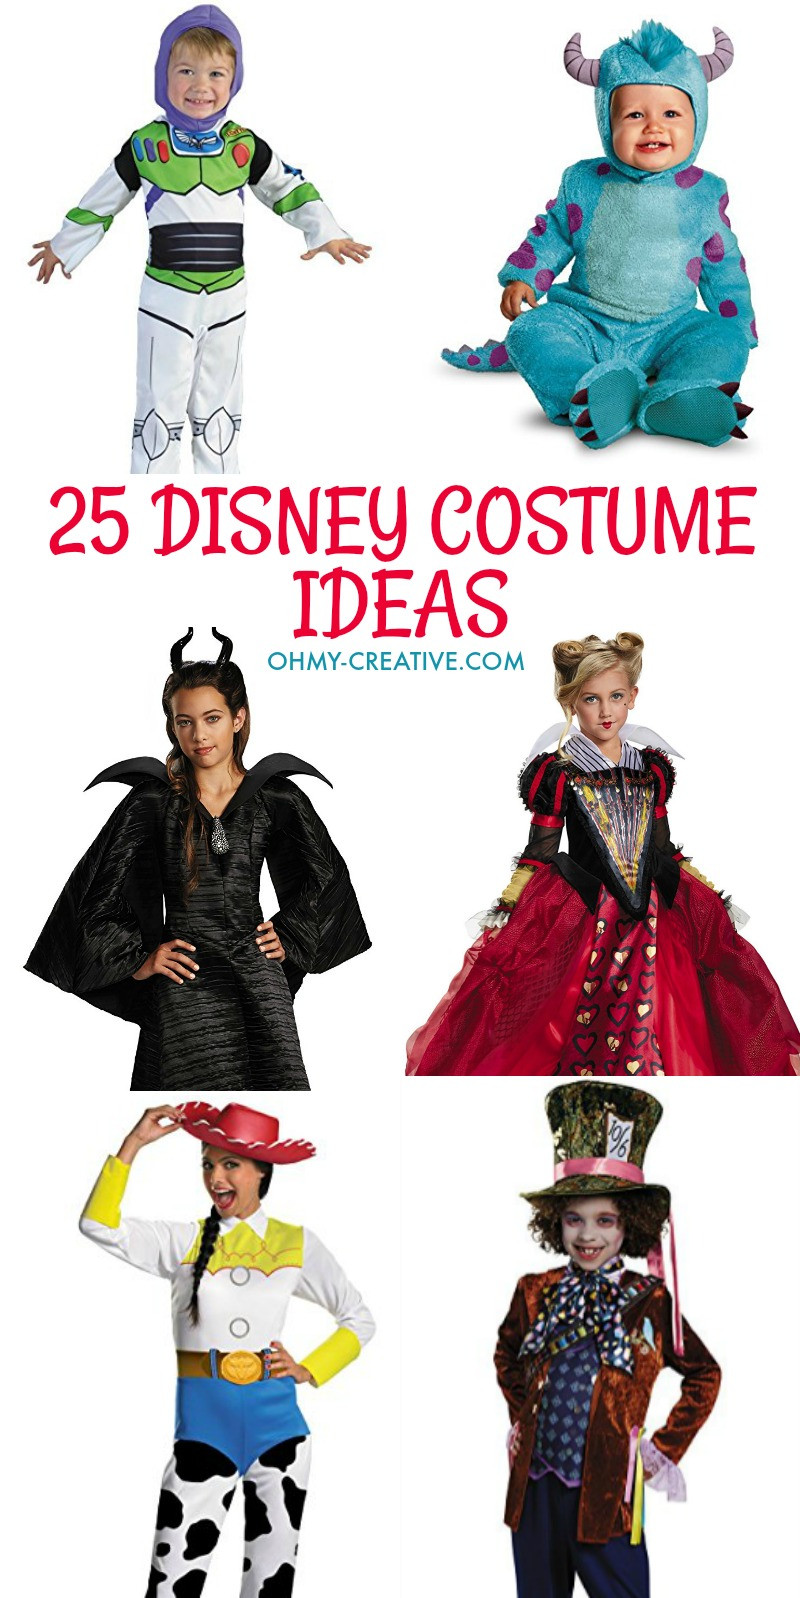 Disney Halloween Party Costume Ideas
 25 Disney Costume Ideas Amazon Oh My Creative